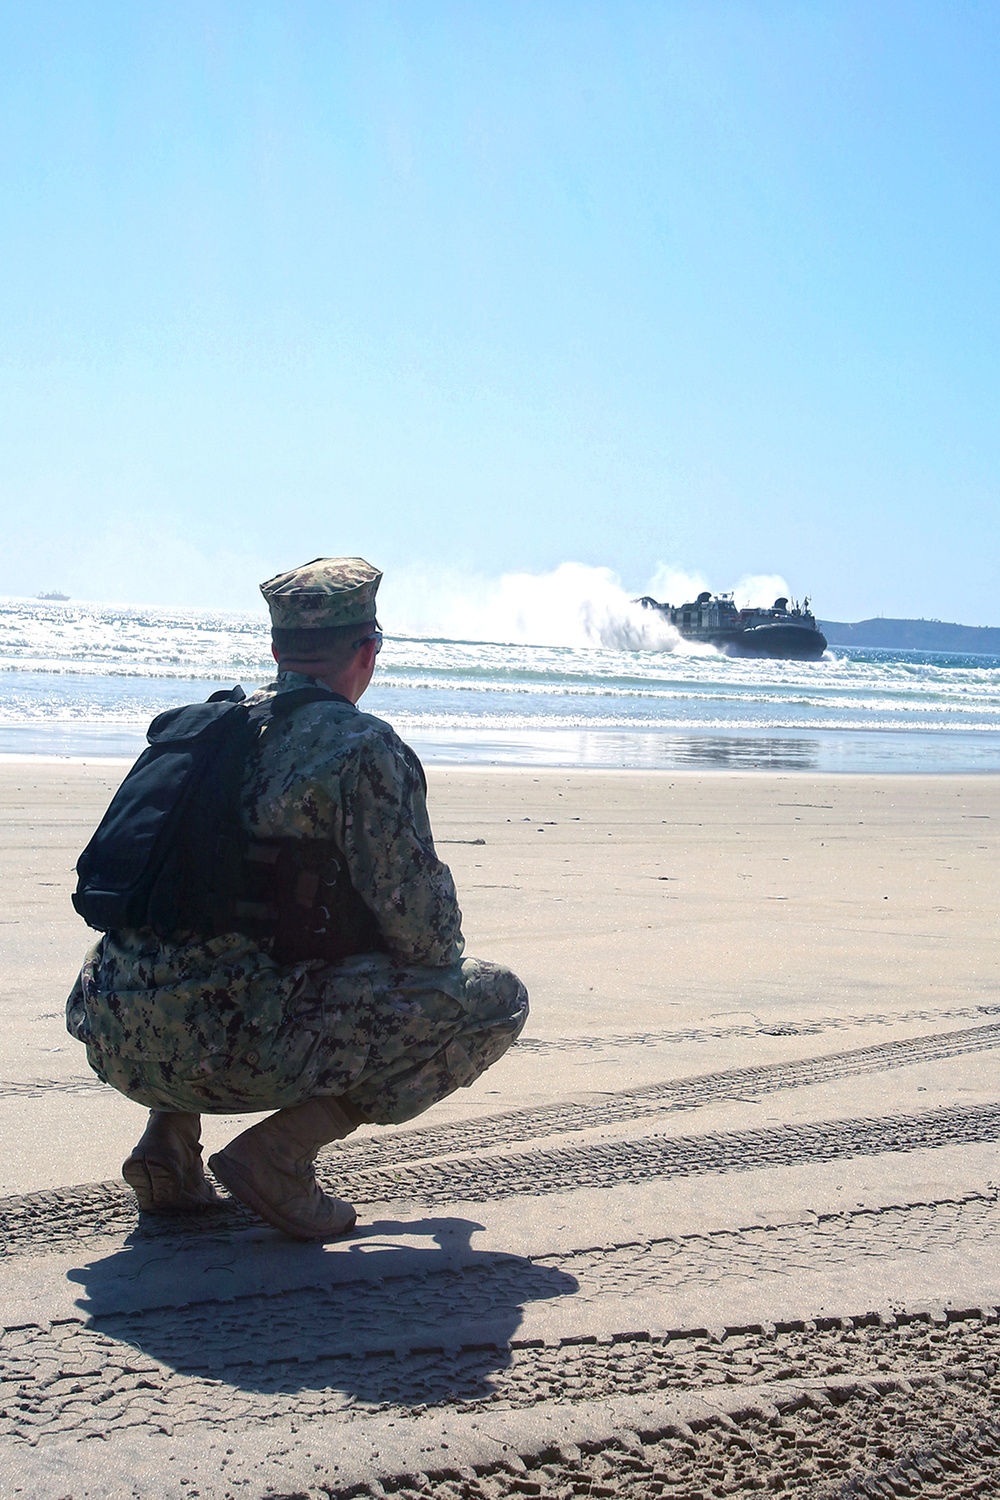 Navy, Marine Corps team builds partnerships with civil authorities